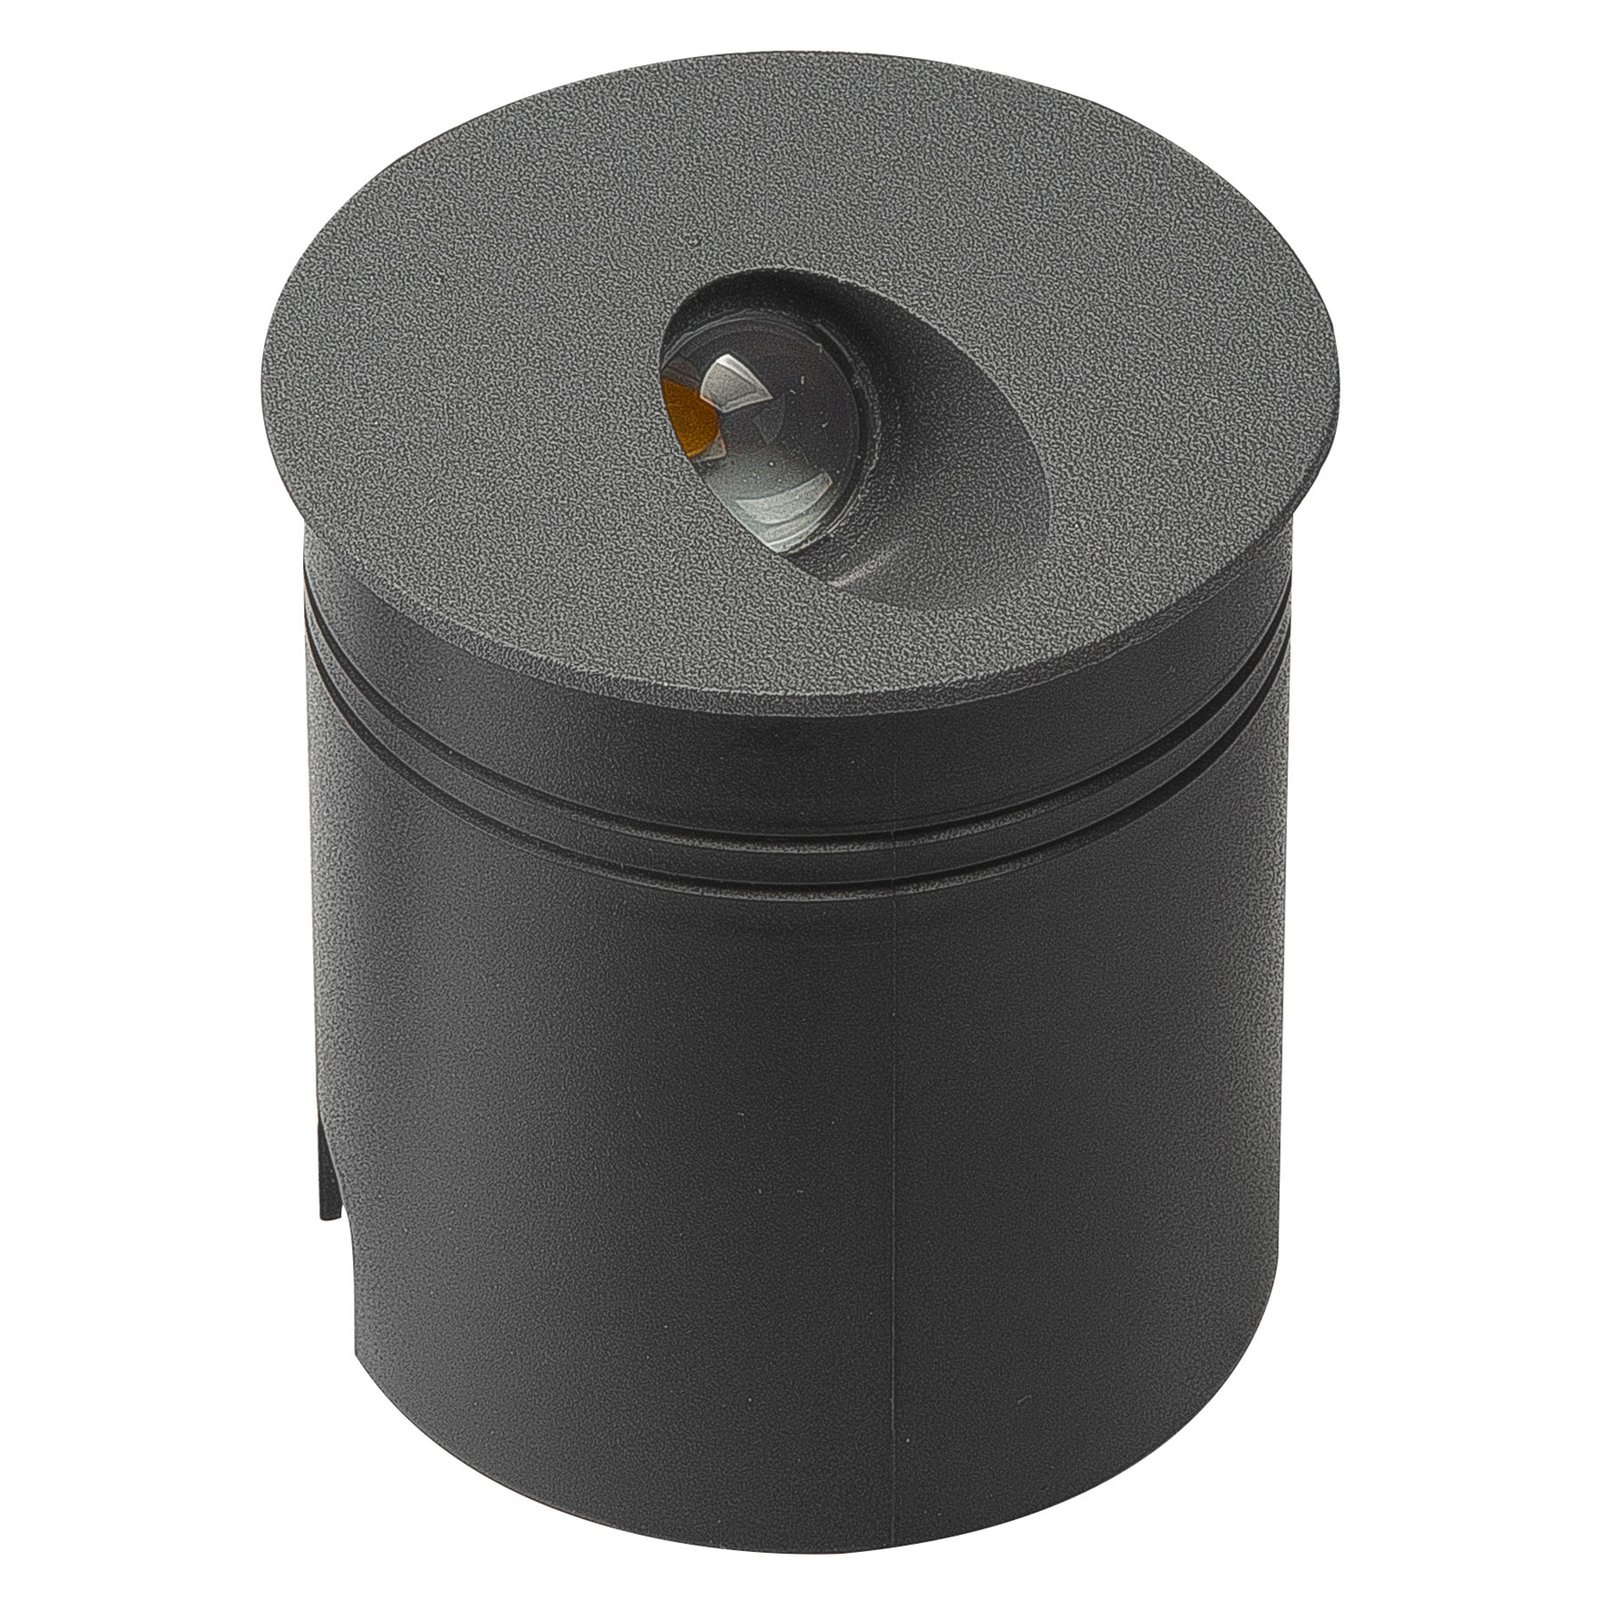 Aspen LED downlight IP65, round, dark grey